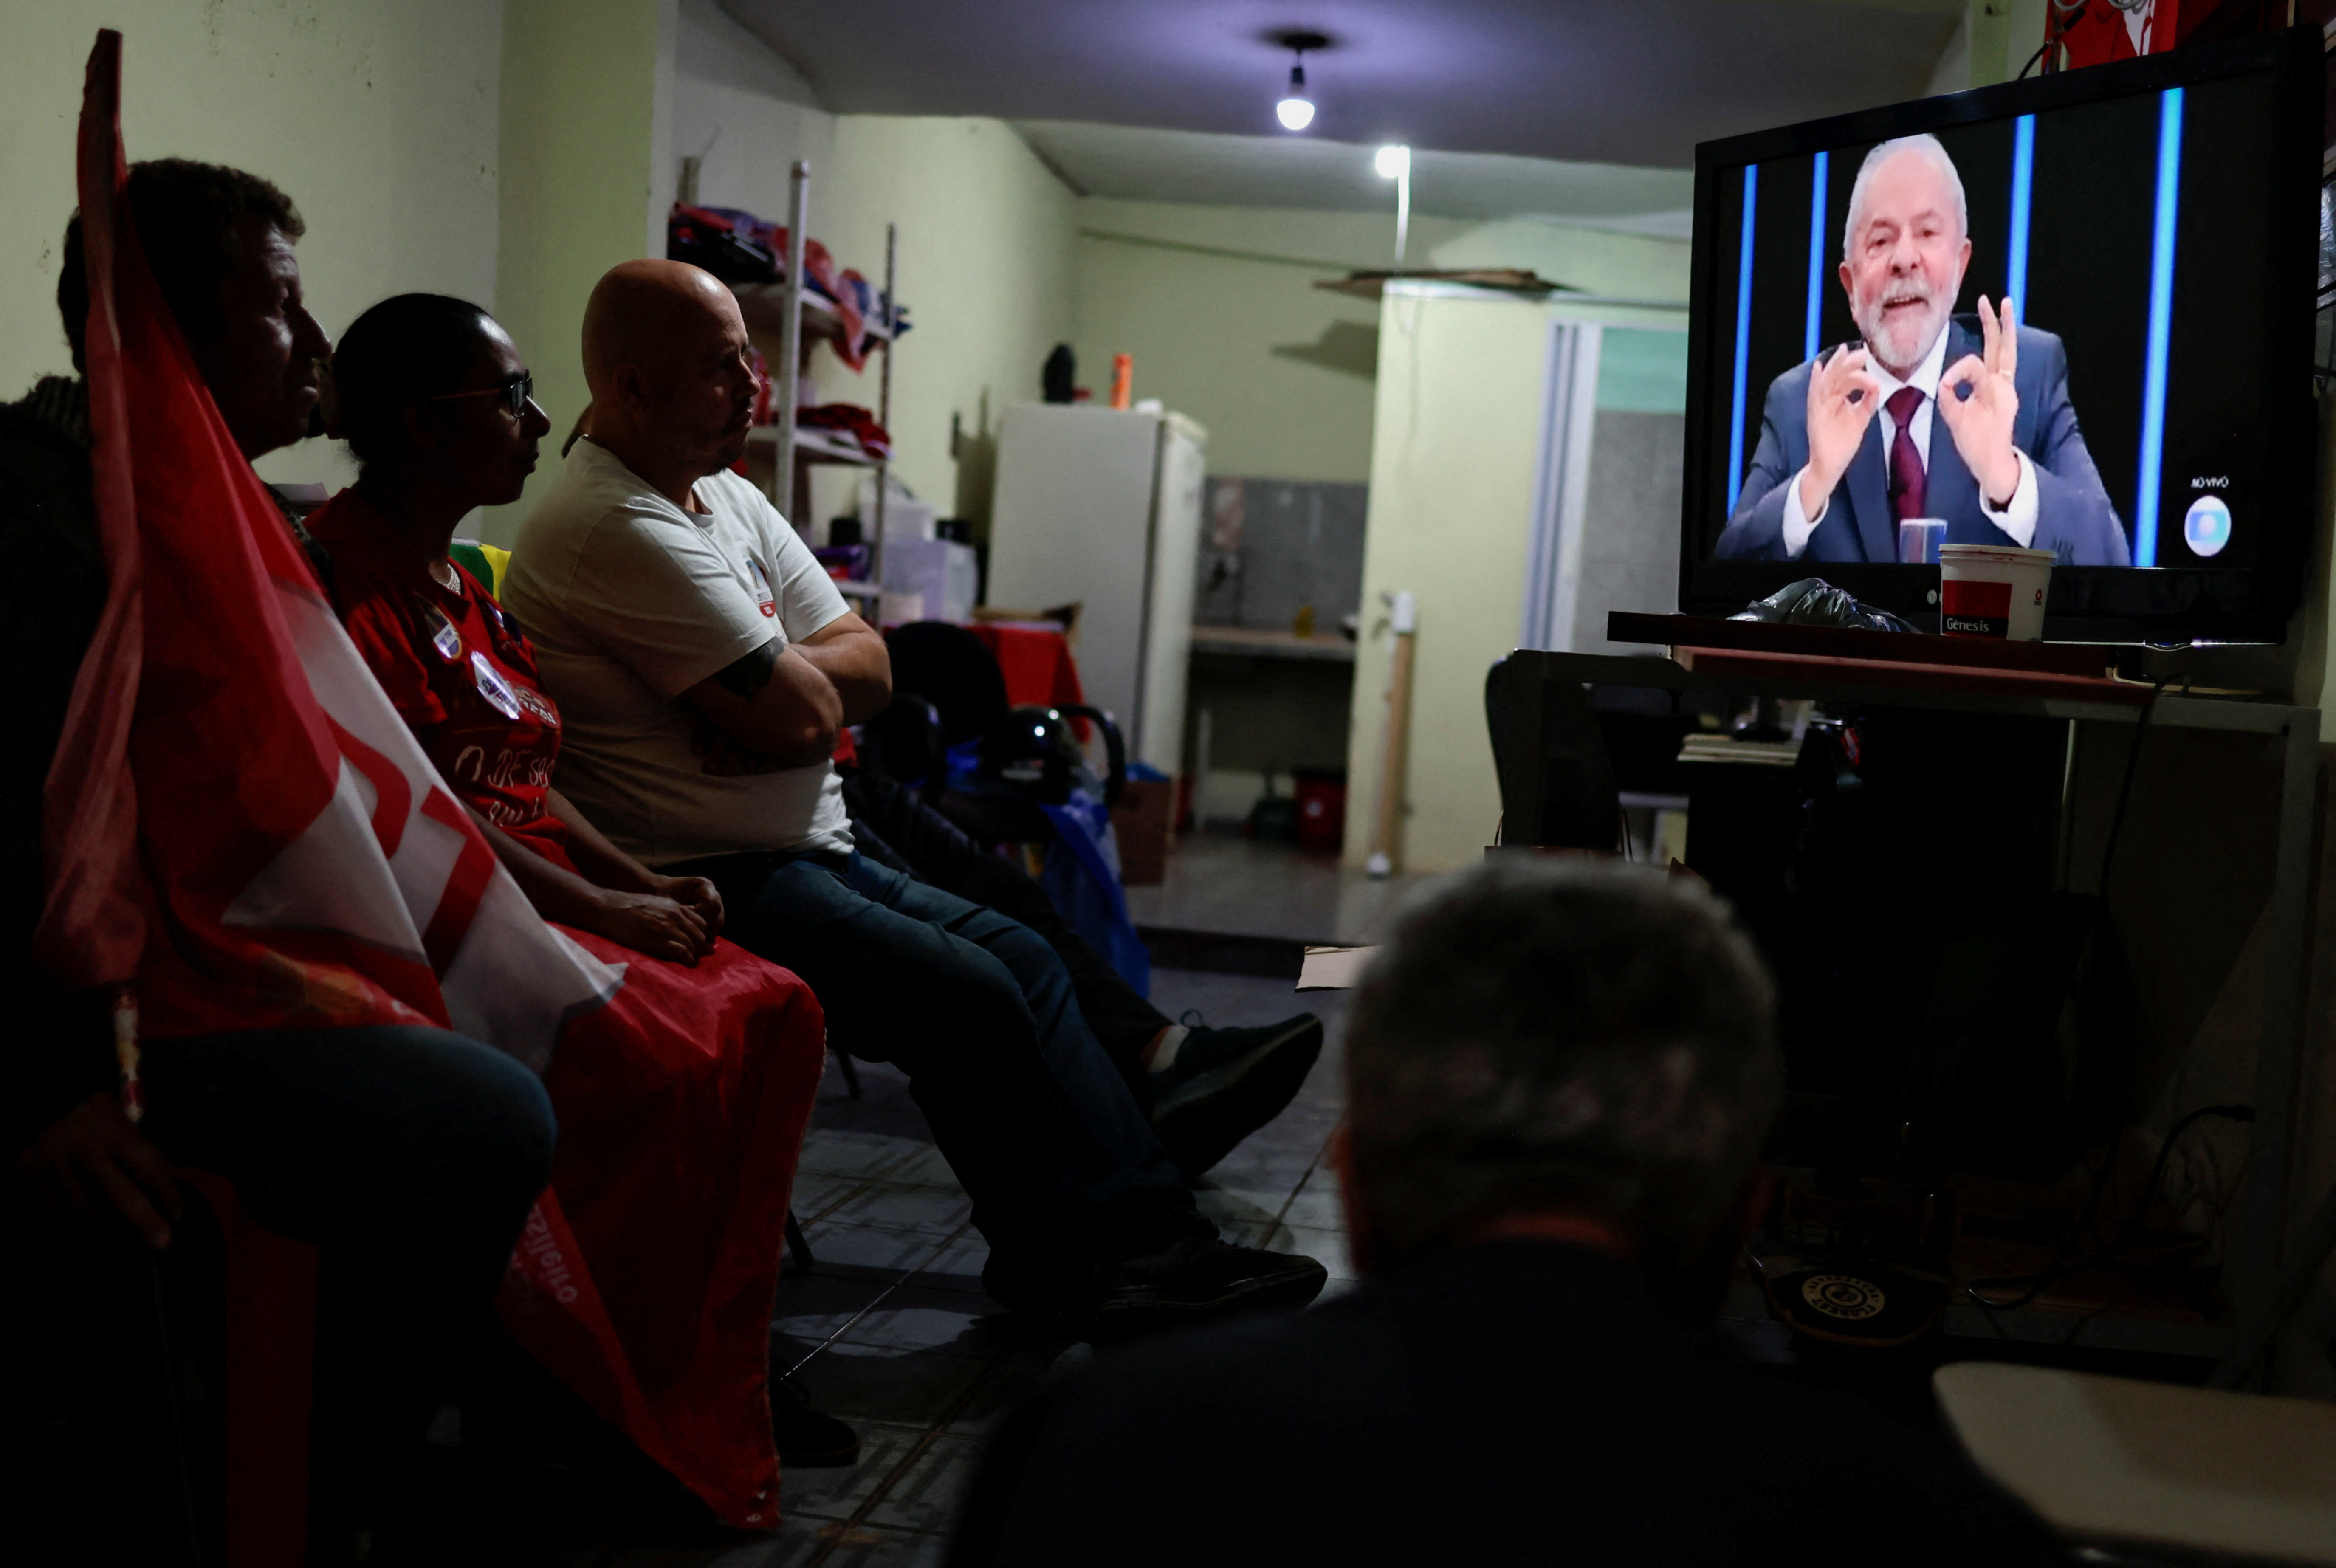 Brazil's former President and candidate Luiz Inacio Lula da Silva's interview with TV Globo's Jornal Nacional